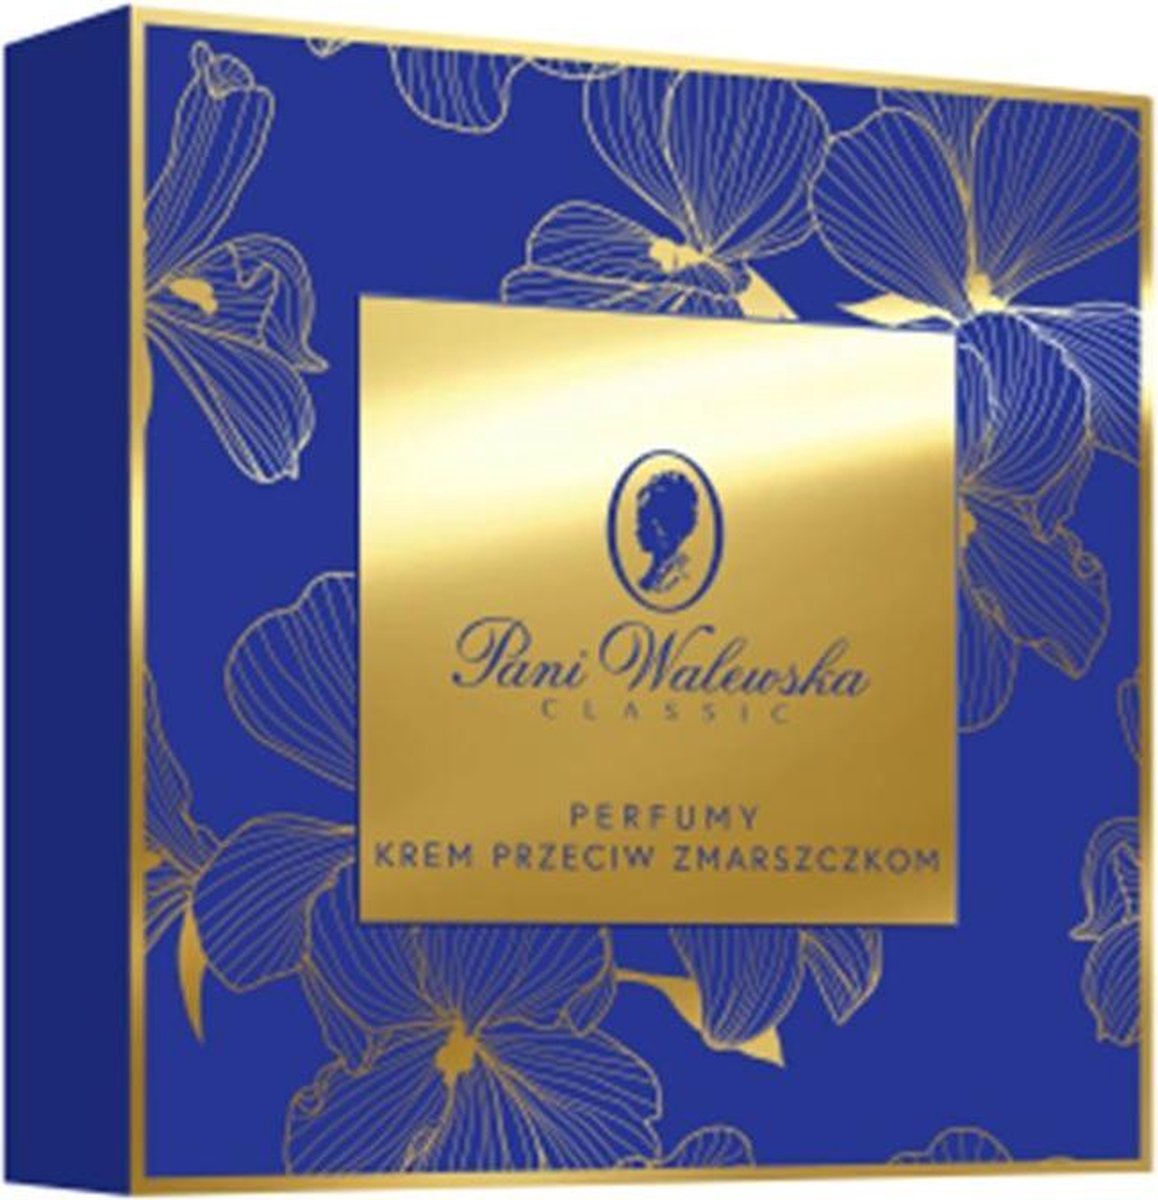 Pani Walewska classic deodorant (90 ml) en anti rimpel crème (50 ml)verpakt in een prachtige gift box ,